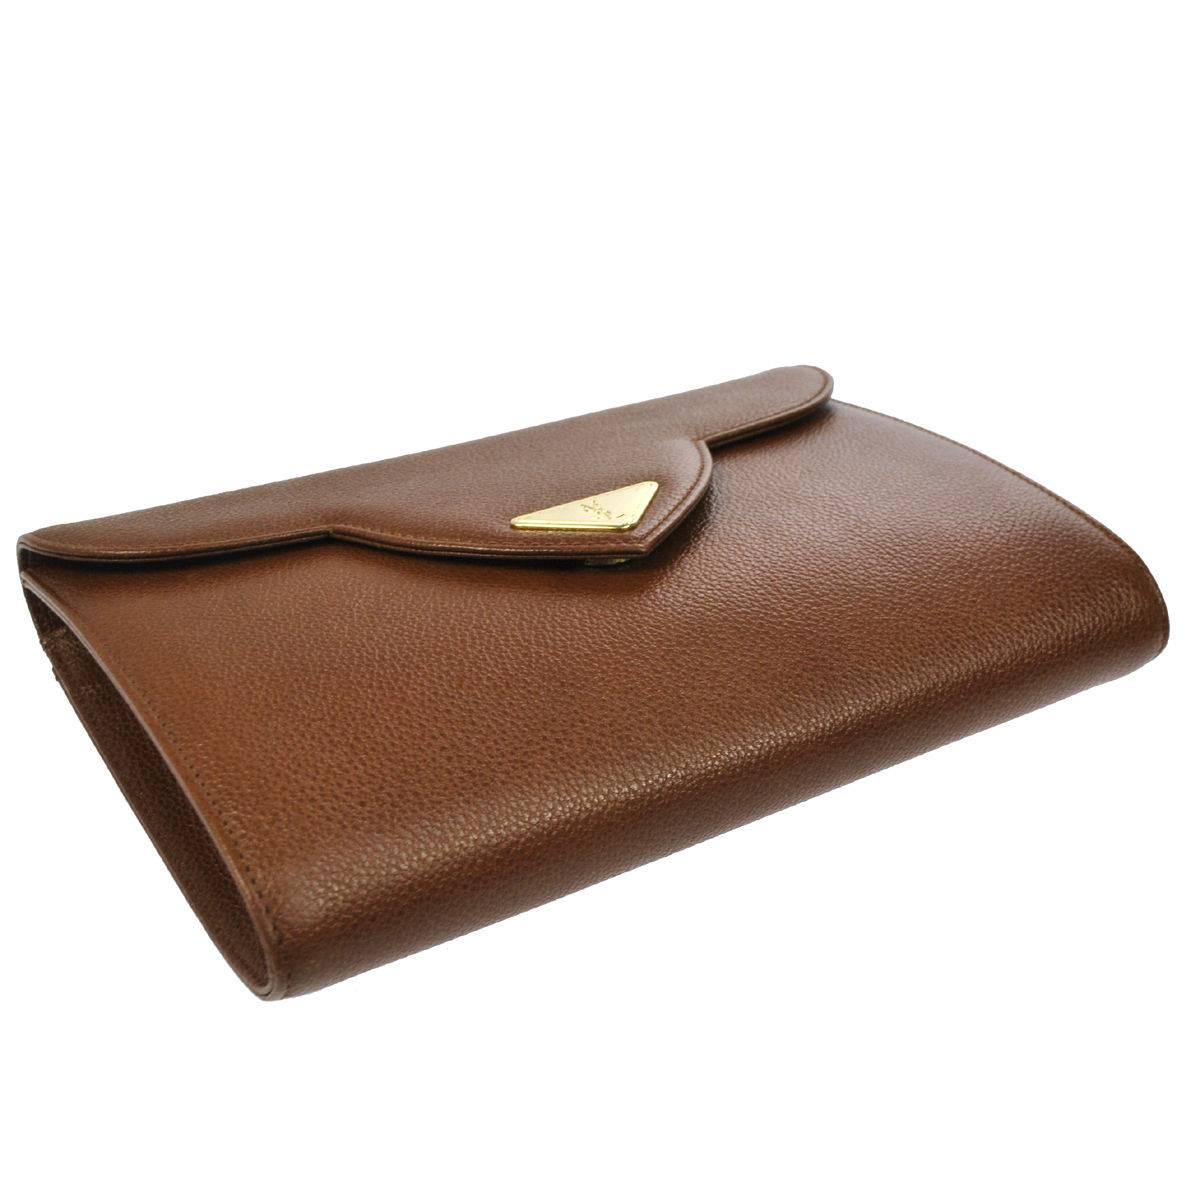 Brown YSL Cognac Leather Gold Hardware Envelope Top Handle Evening Clutch Bag